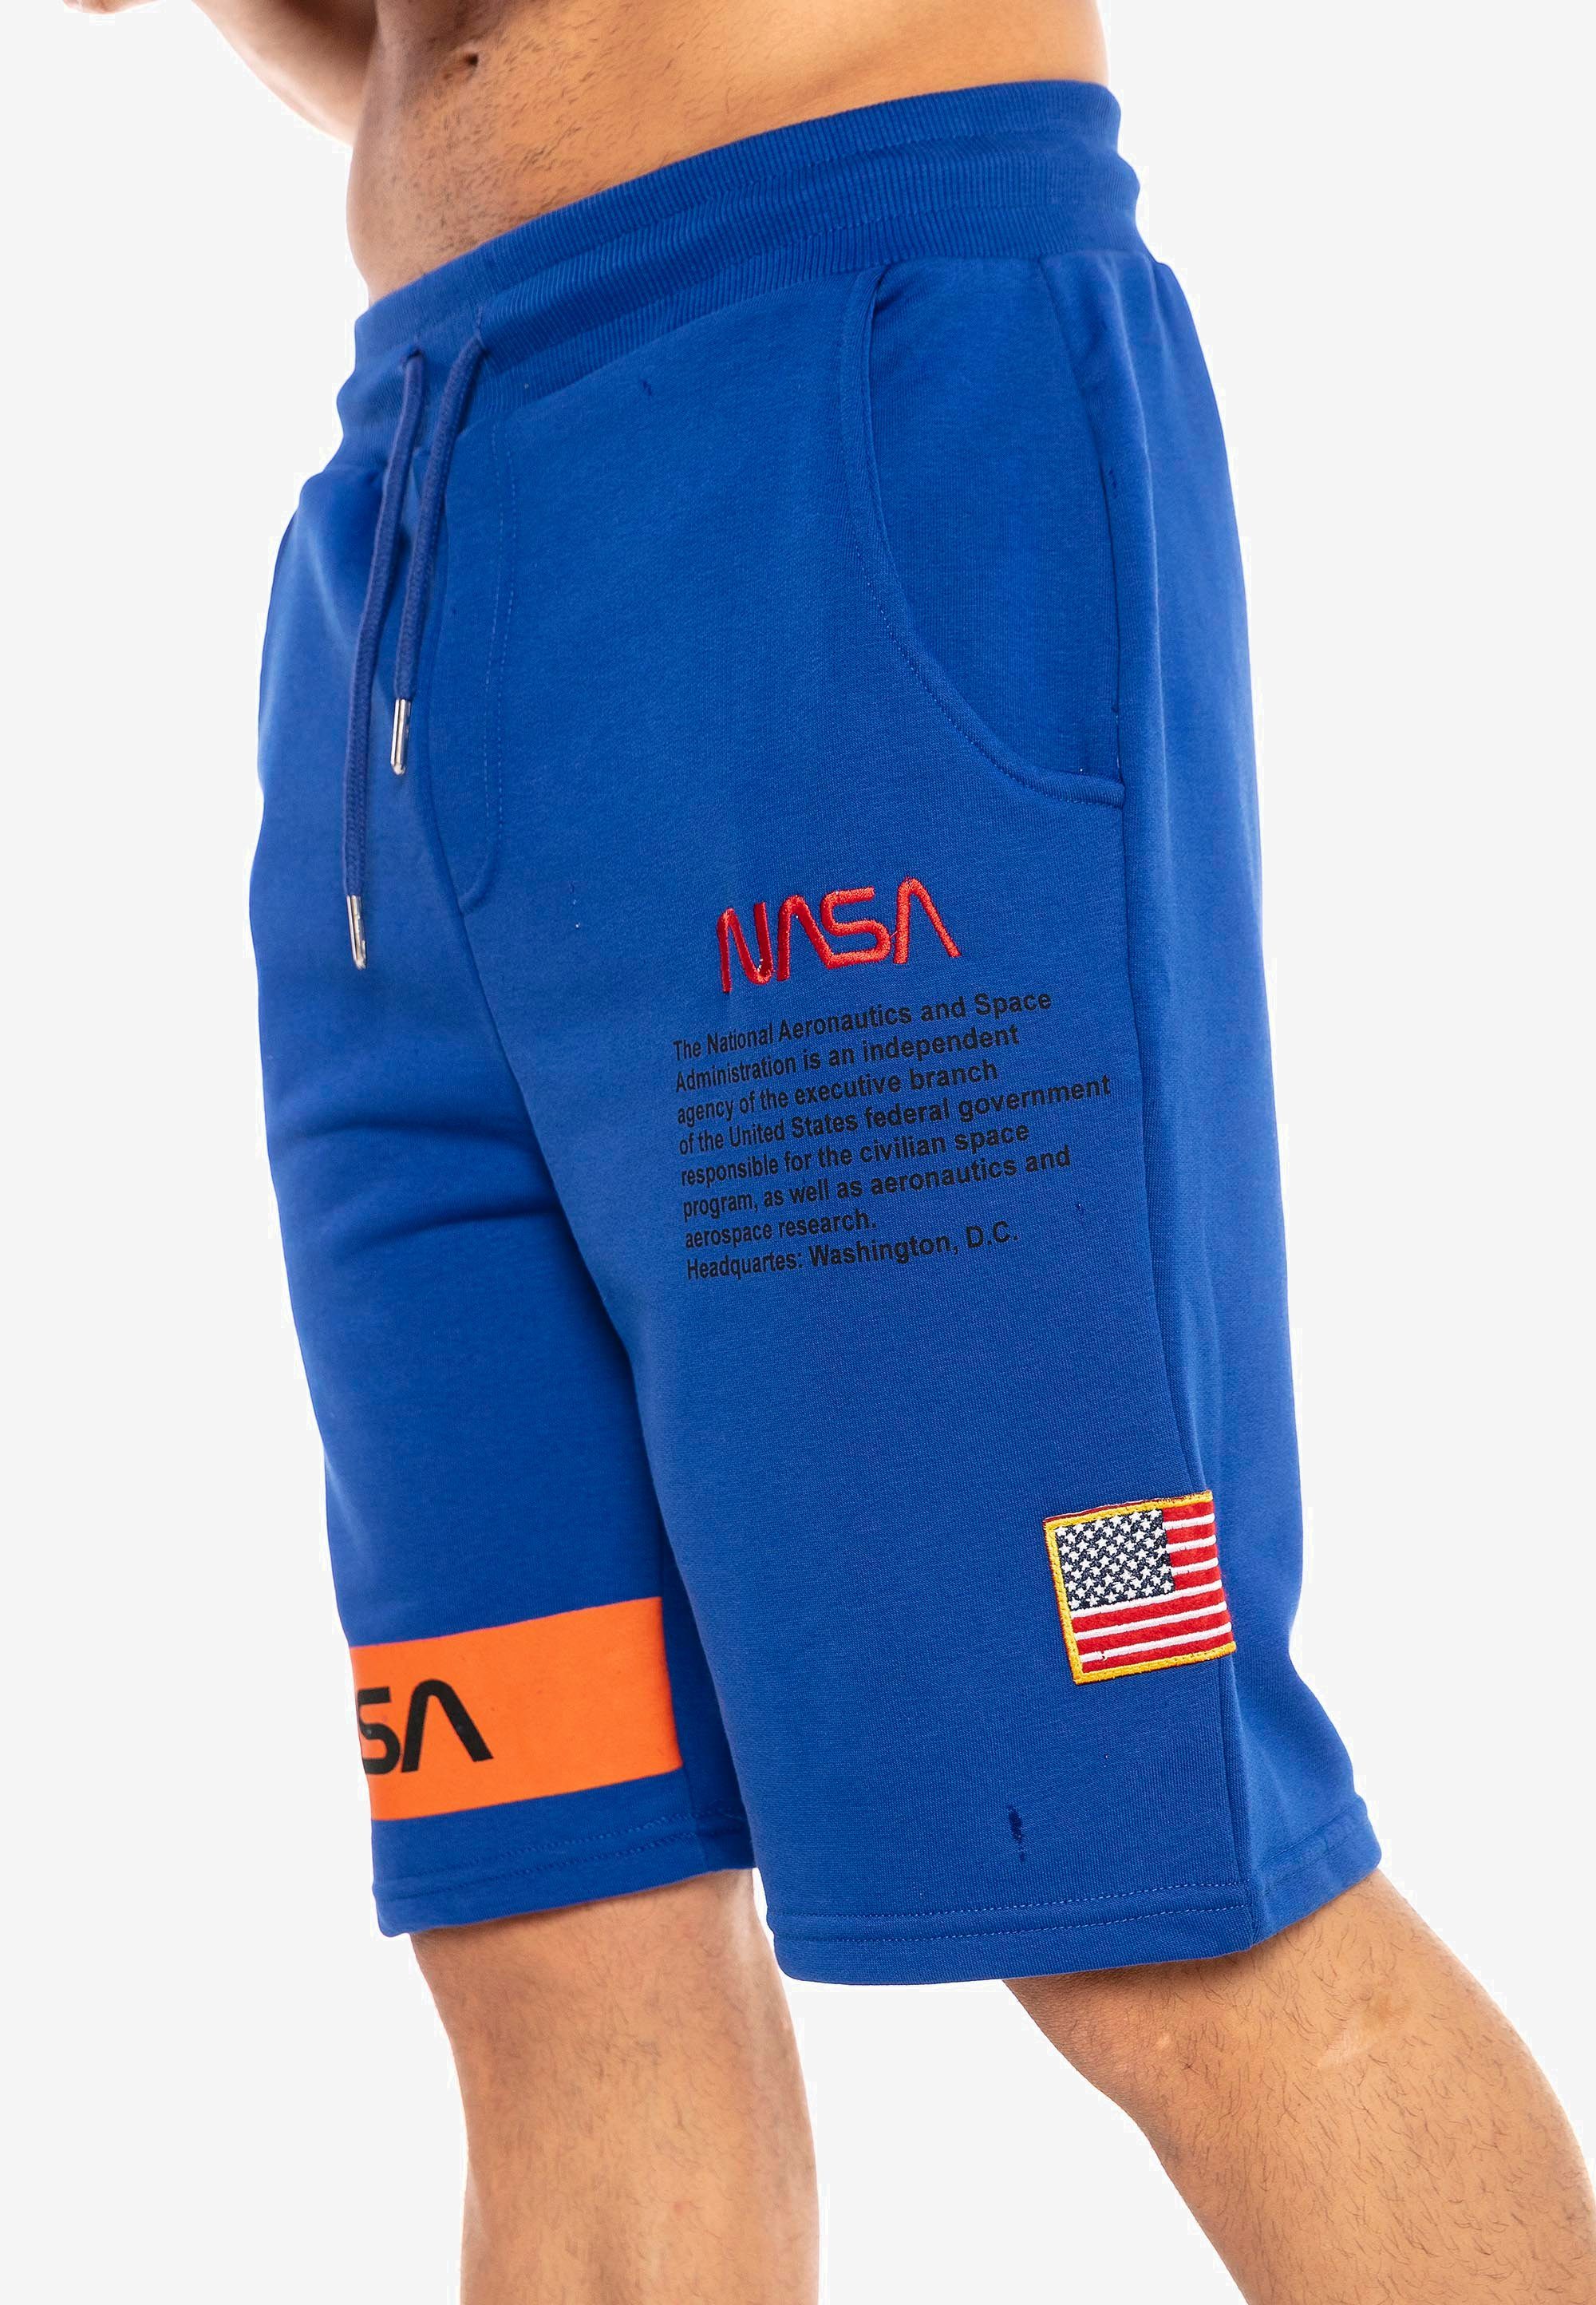 RedBridge Shorts Plano gesticktem blau NASA-Motiv mit